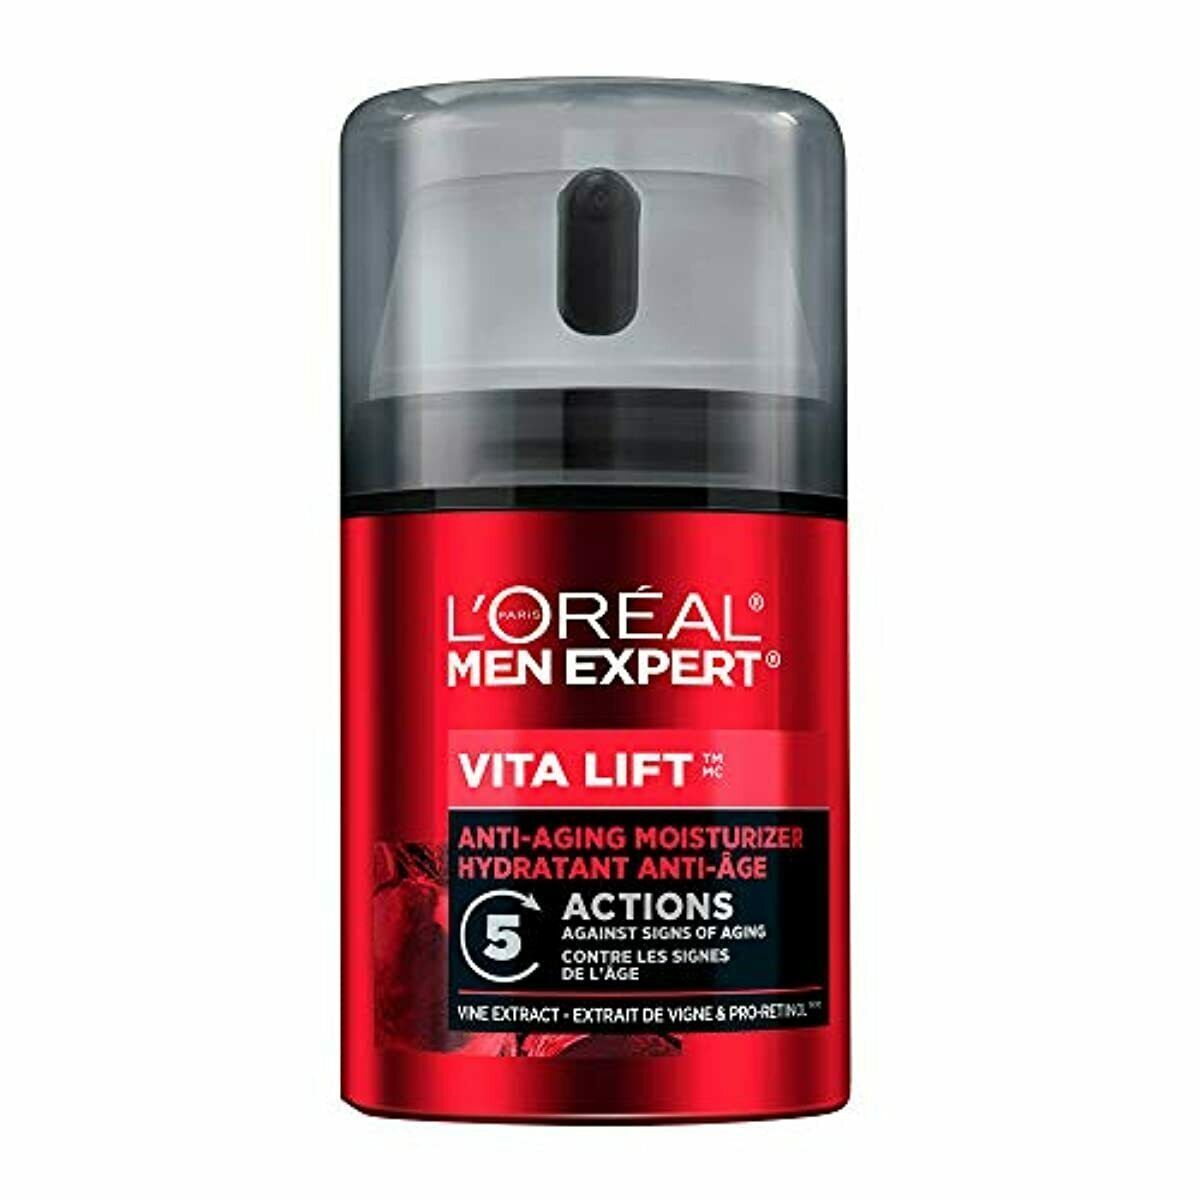 L'Oreal Paris Men's Expert Vita Lift 5 Moisturiser Anti-Ageing Cream (50ml) E625